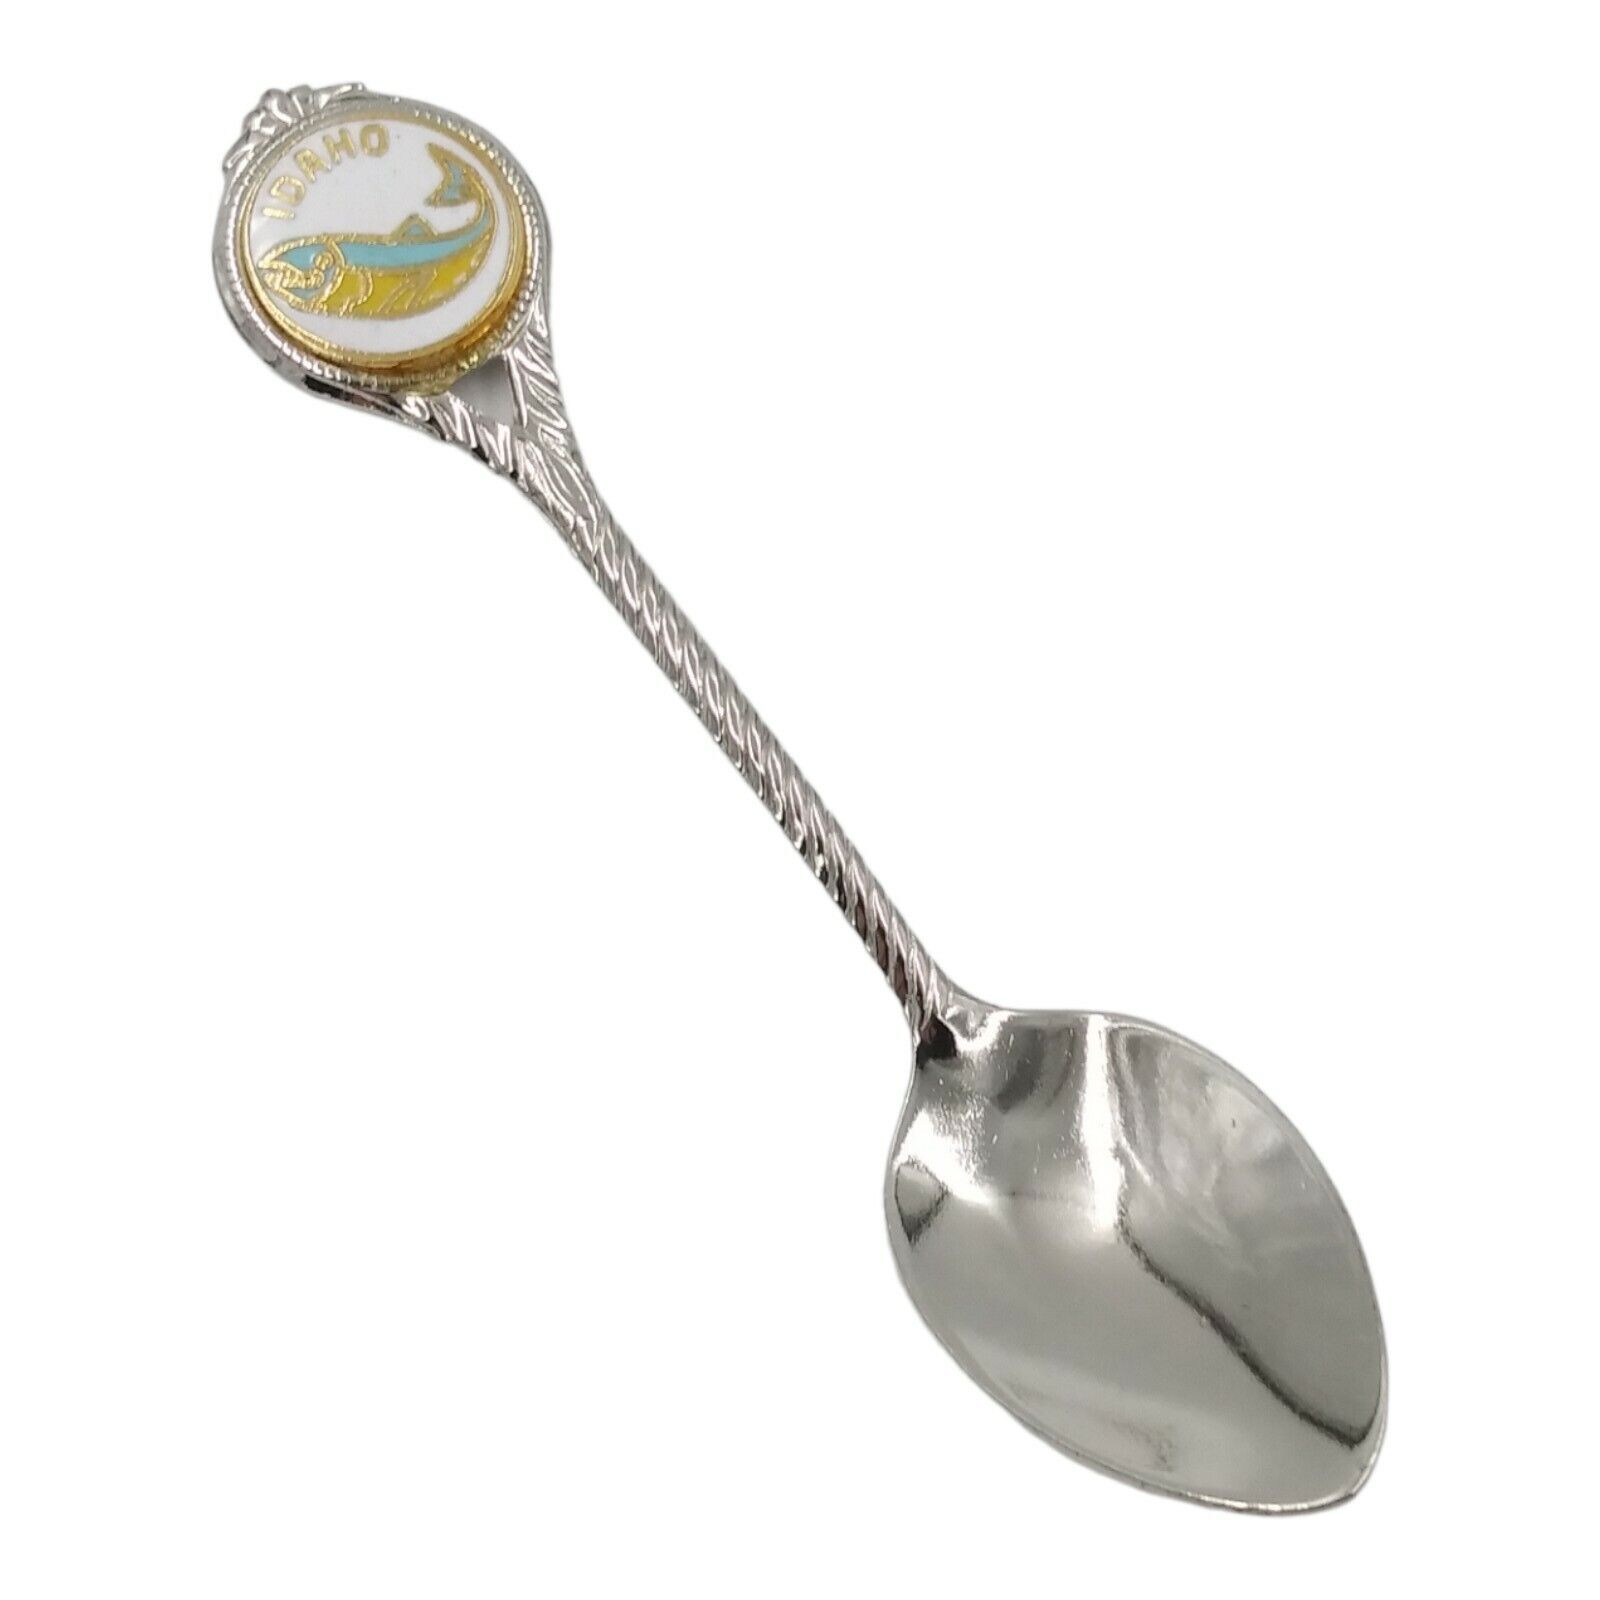 Vintage Idaho Souvenir Spoon US Collectible Sterling Silver Fish